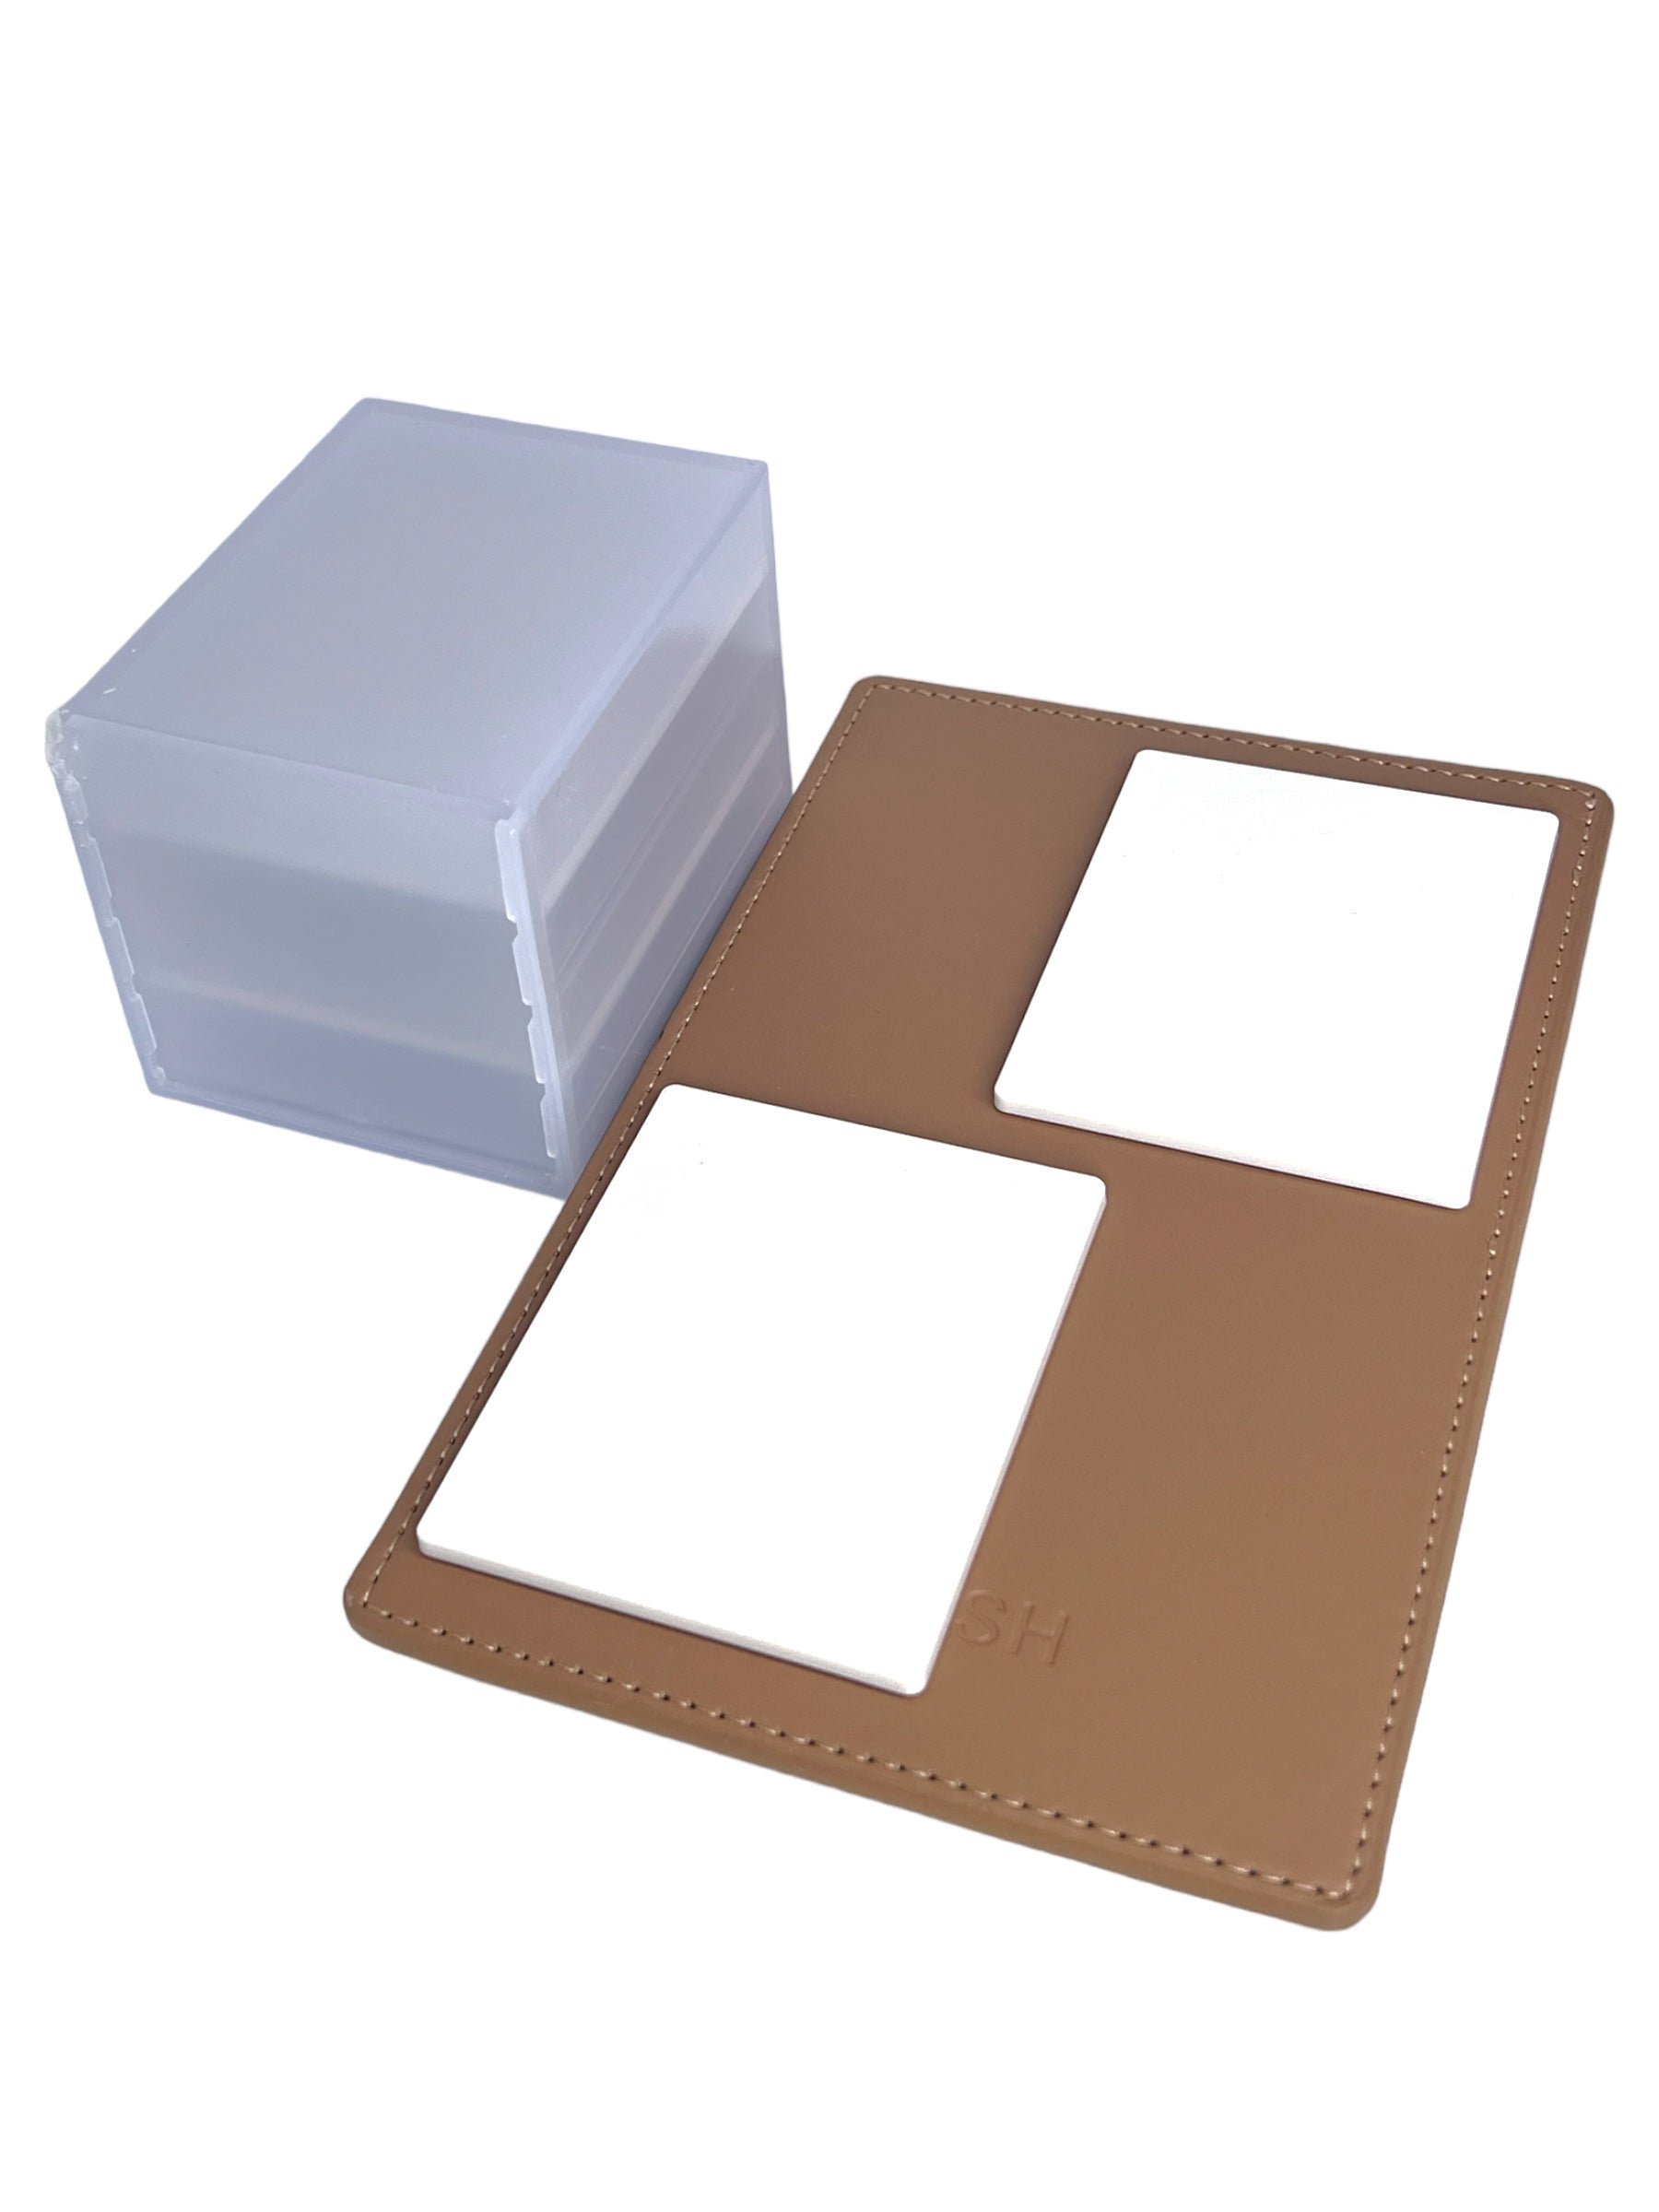 Magnetic Lash Tile with Mini Tiles